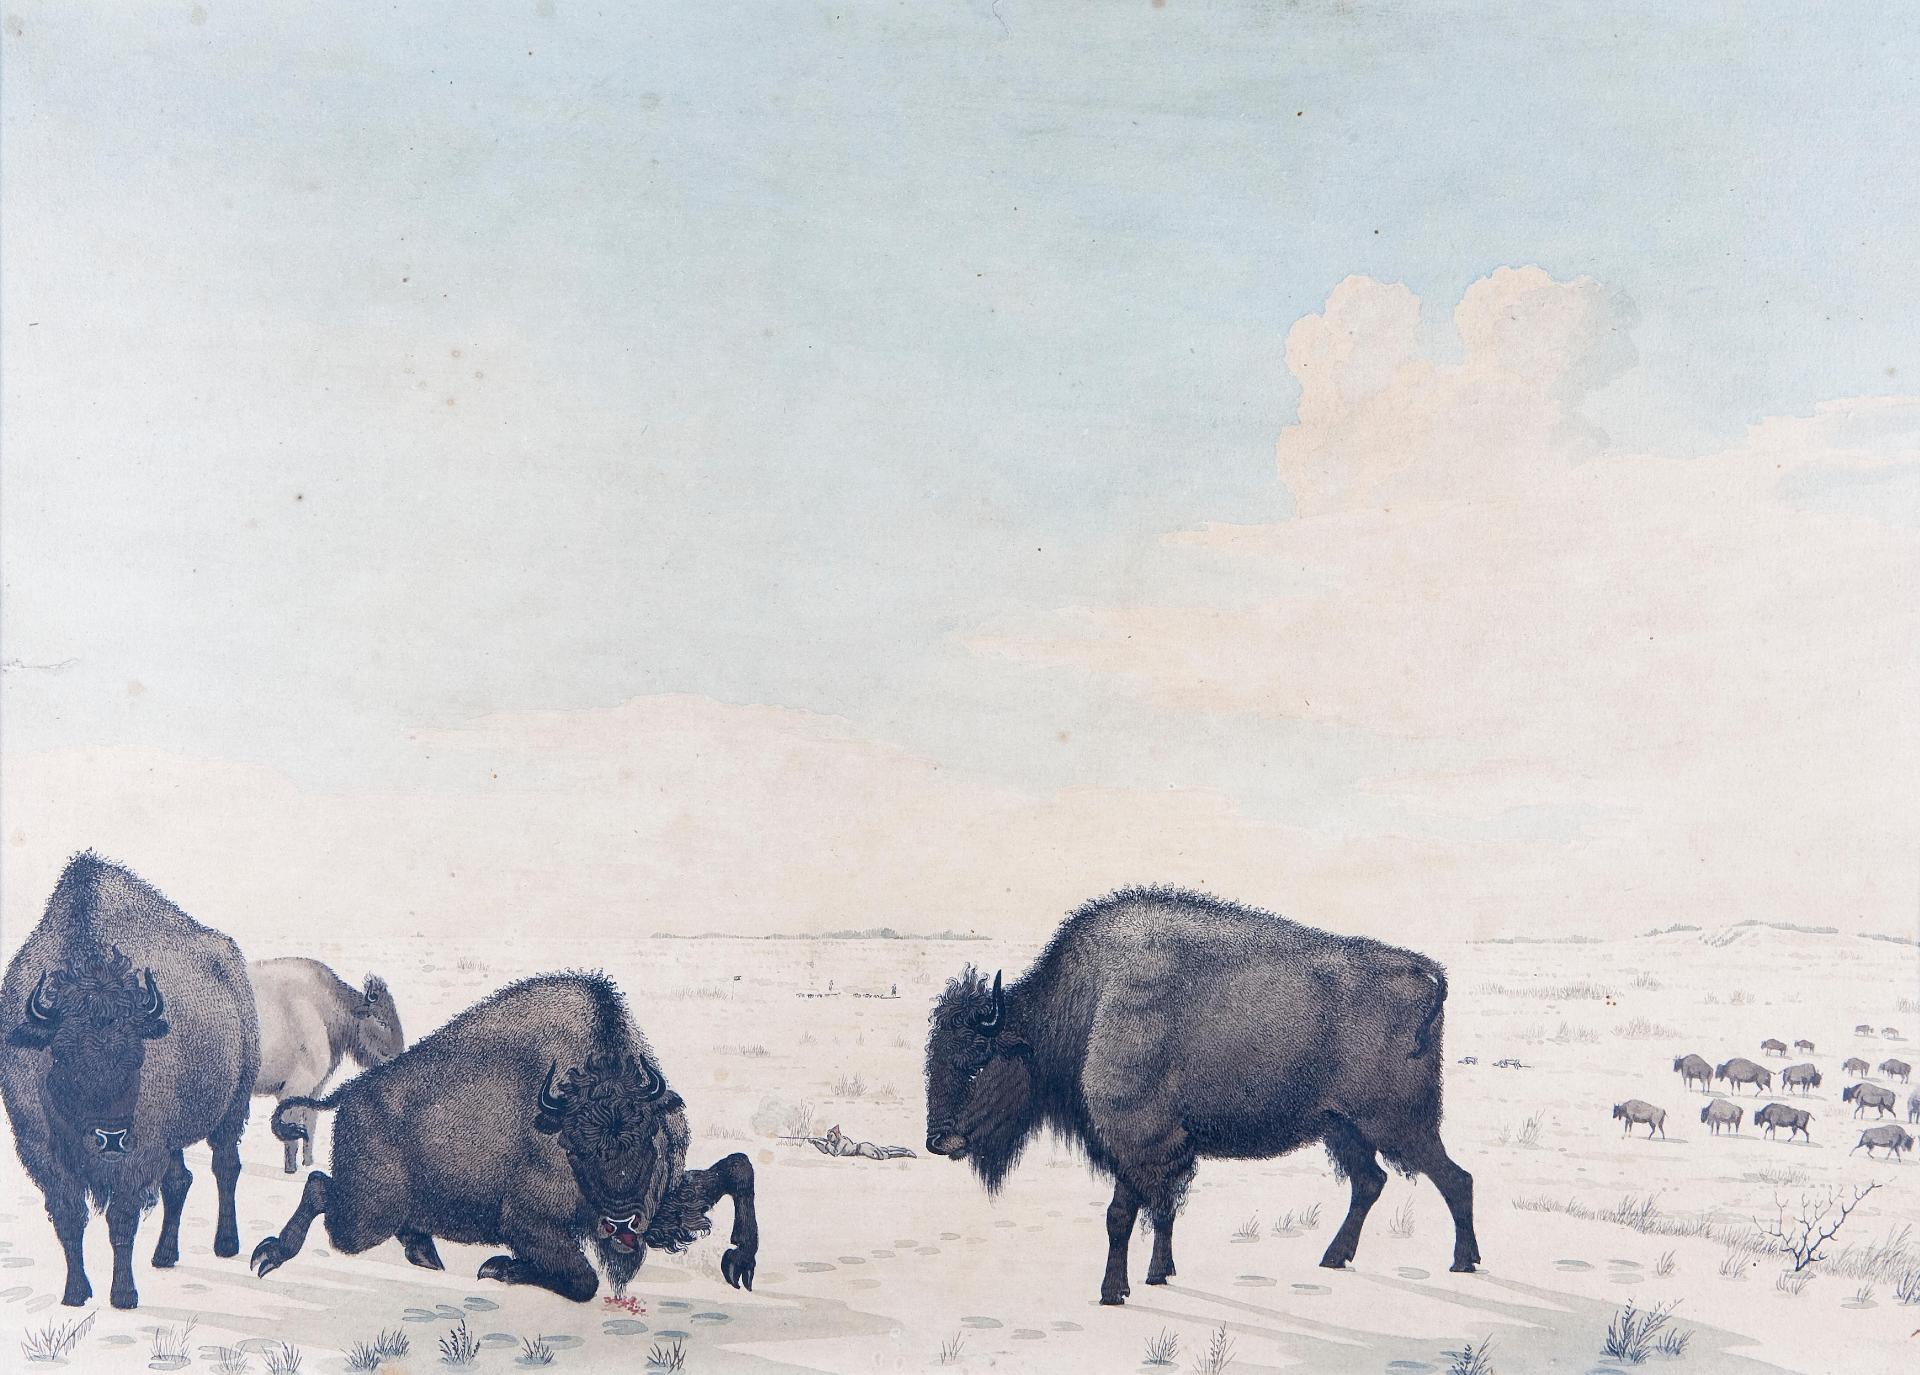 Peter Rindisbacher (1806-1834) - Indian hunter shooting at bison herd